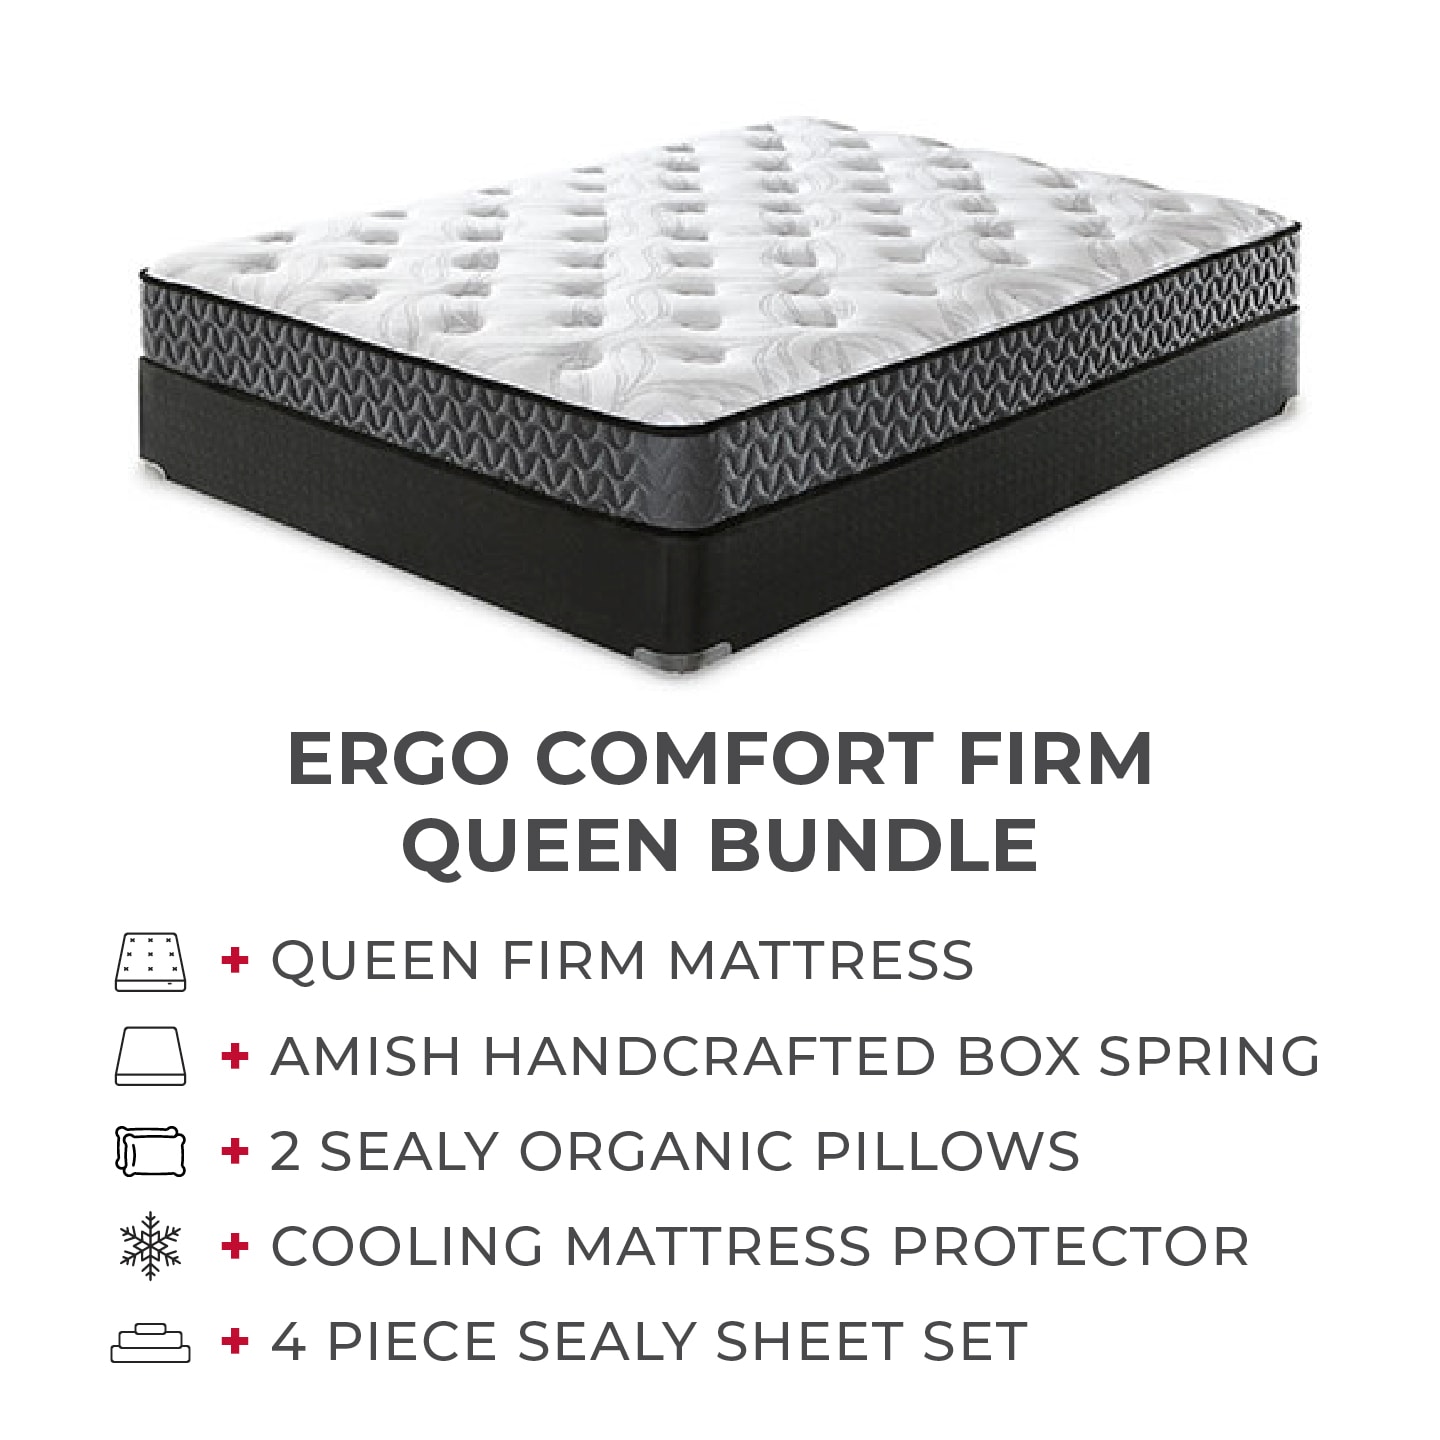 Ergo Comfort Firm Queen Mattress Bundle